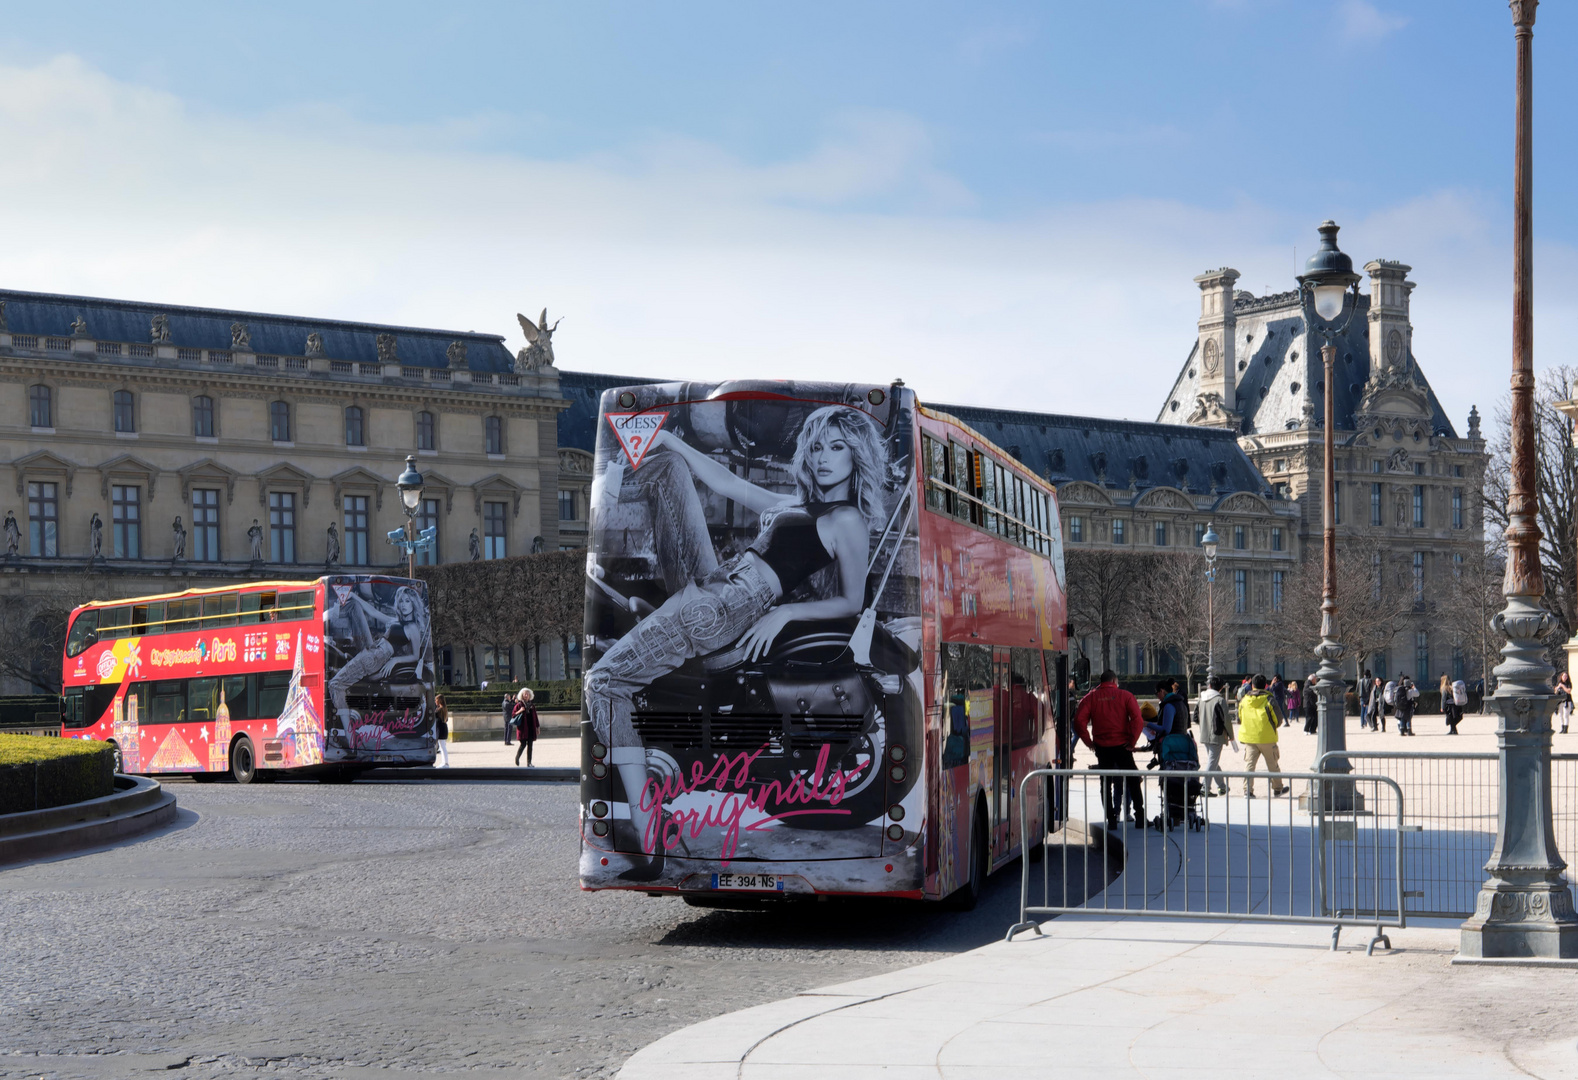 London Bus in Paris ?